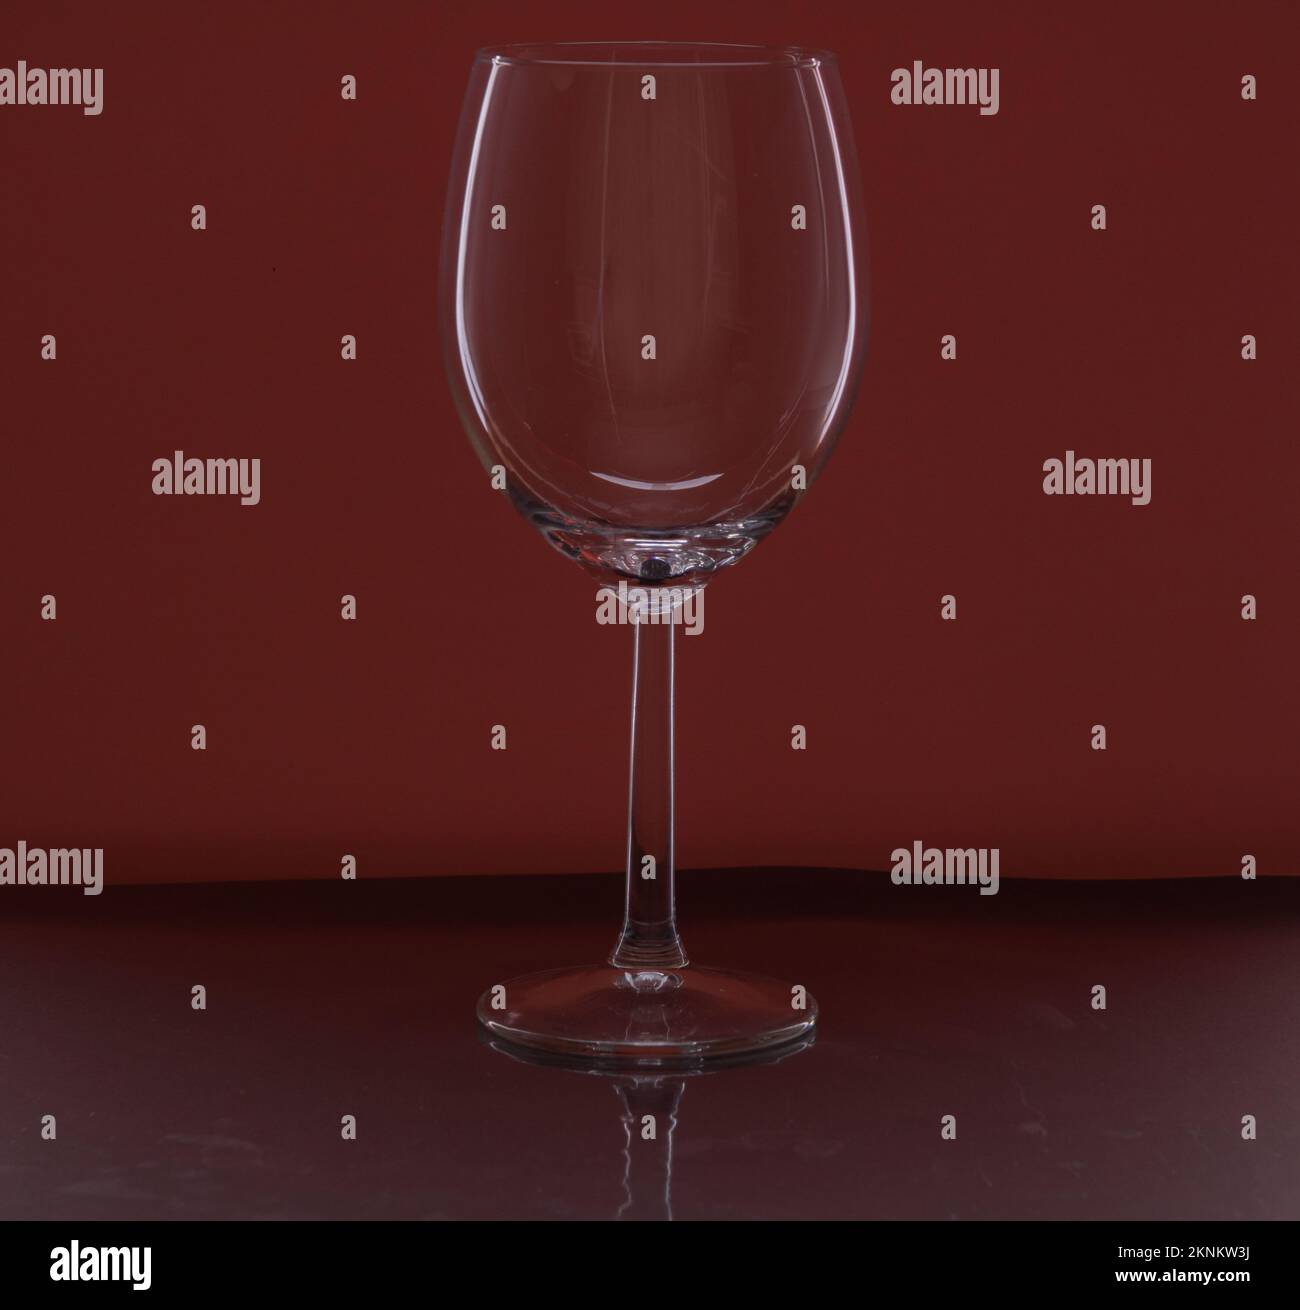 https://c8.alamy.com/comp/2KNKW3J/photo-of-an-empty-wine-glass-on-a-pink-background-2KNKW3J.jpg